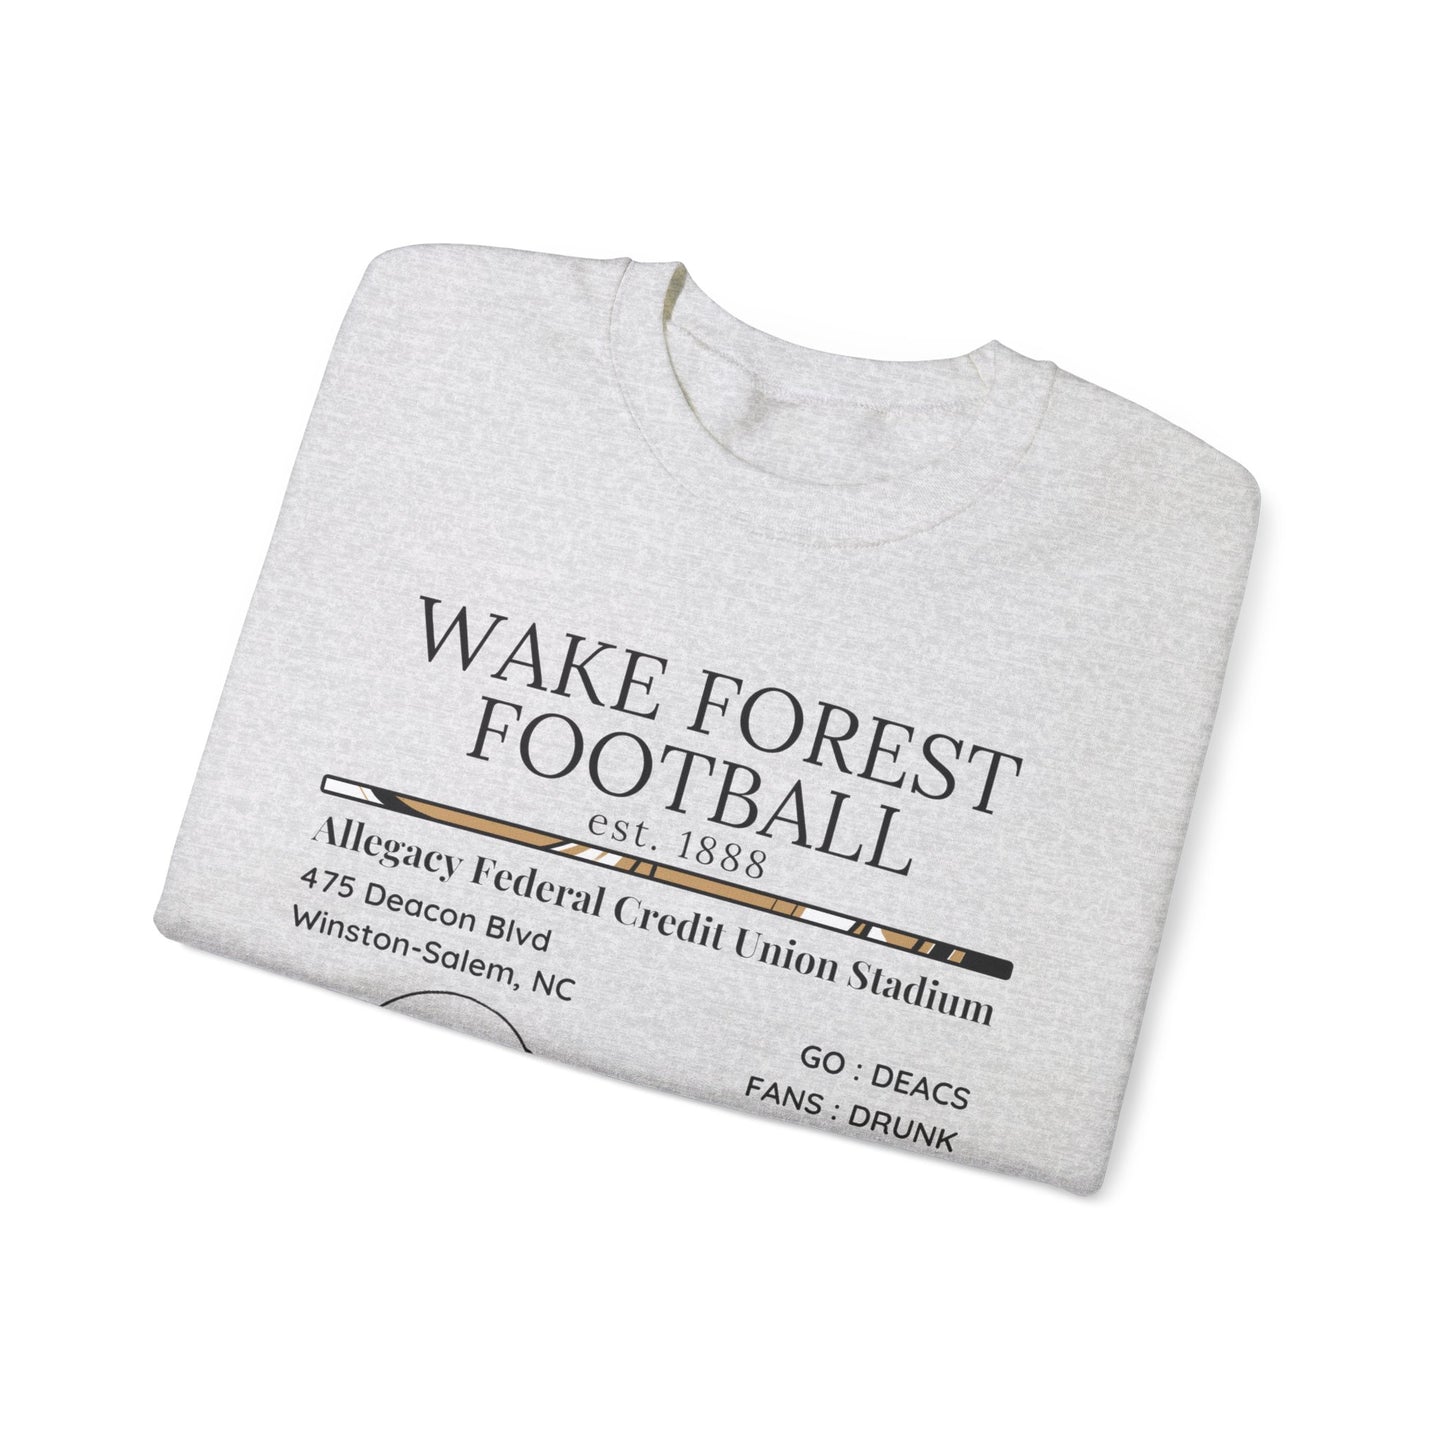 Wake Forest Football Sweatshirt